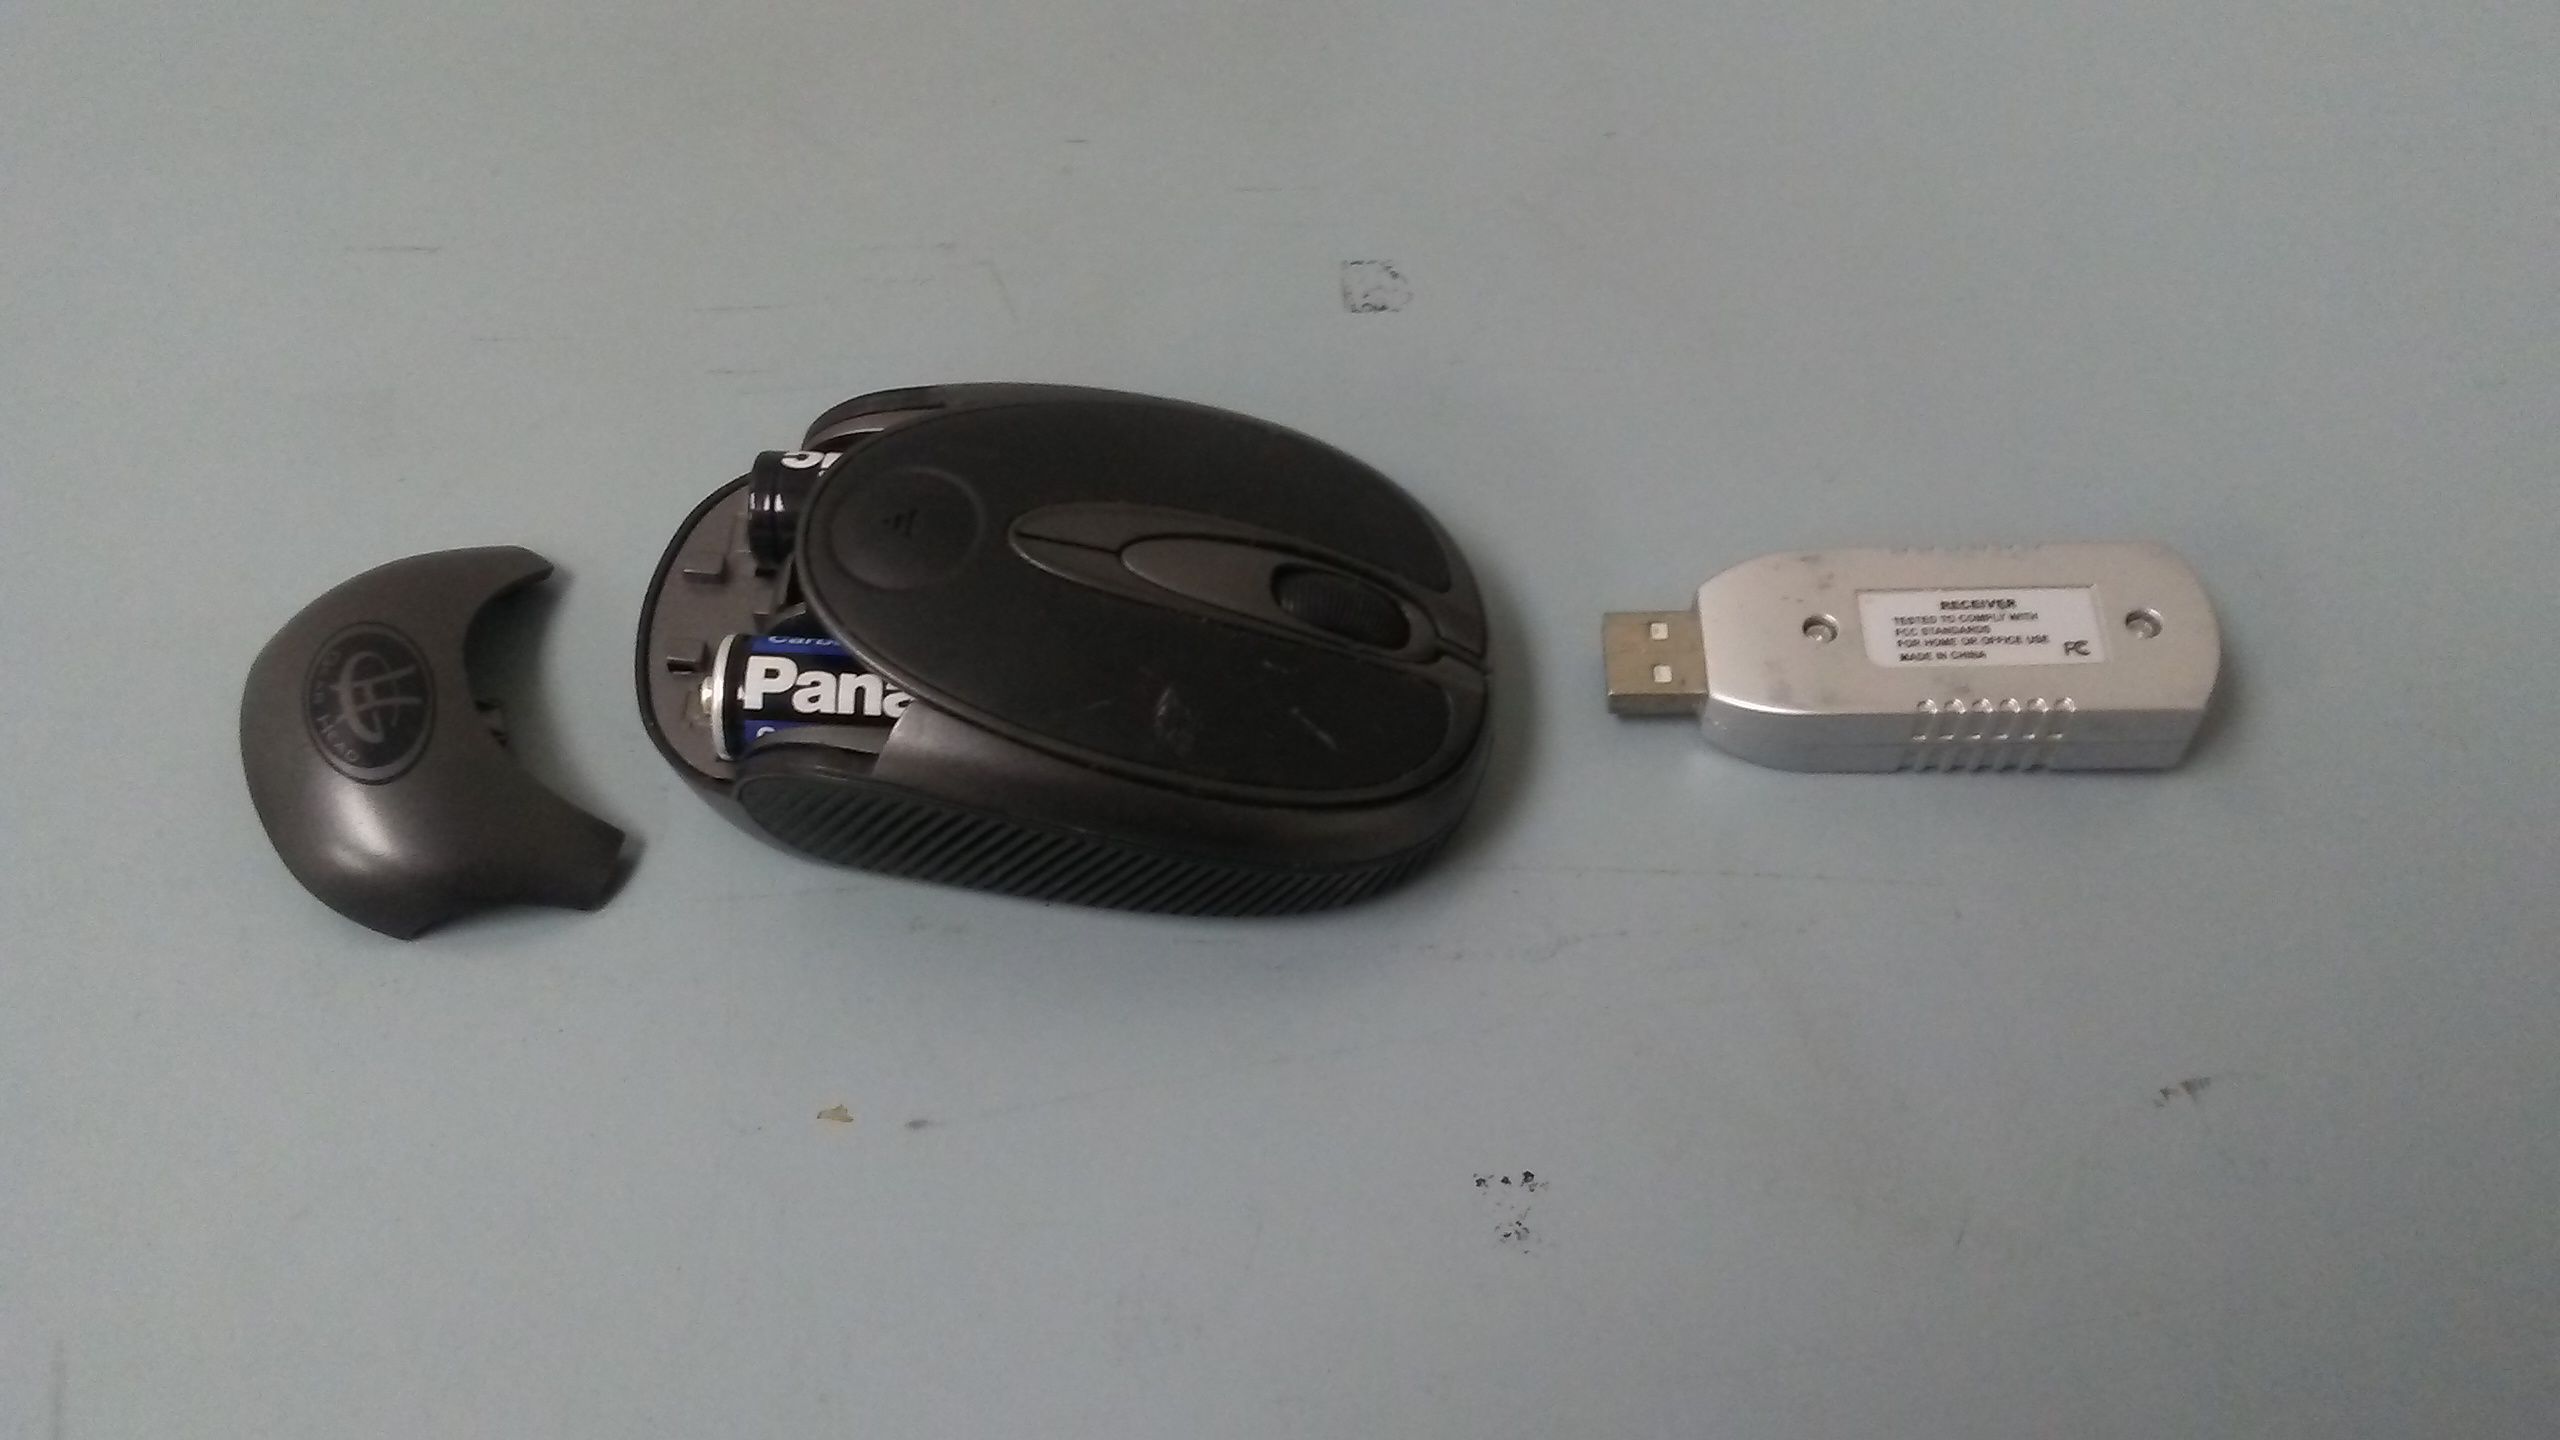 Gear Head Optical Wireless Mouse